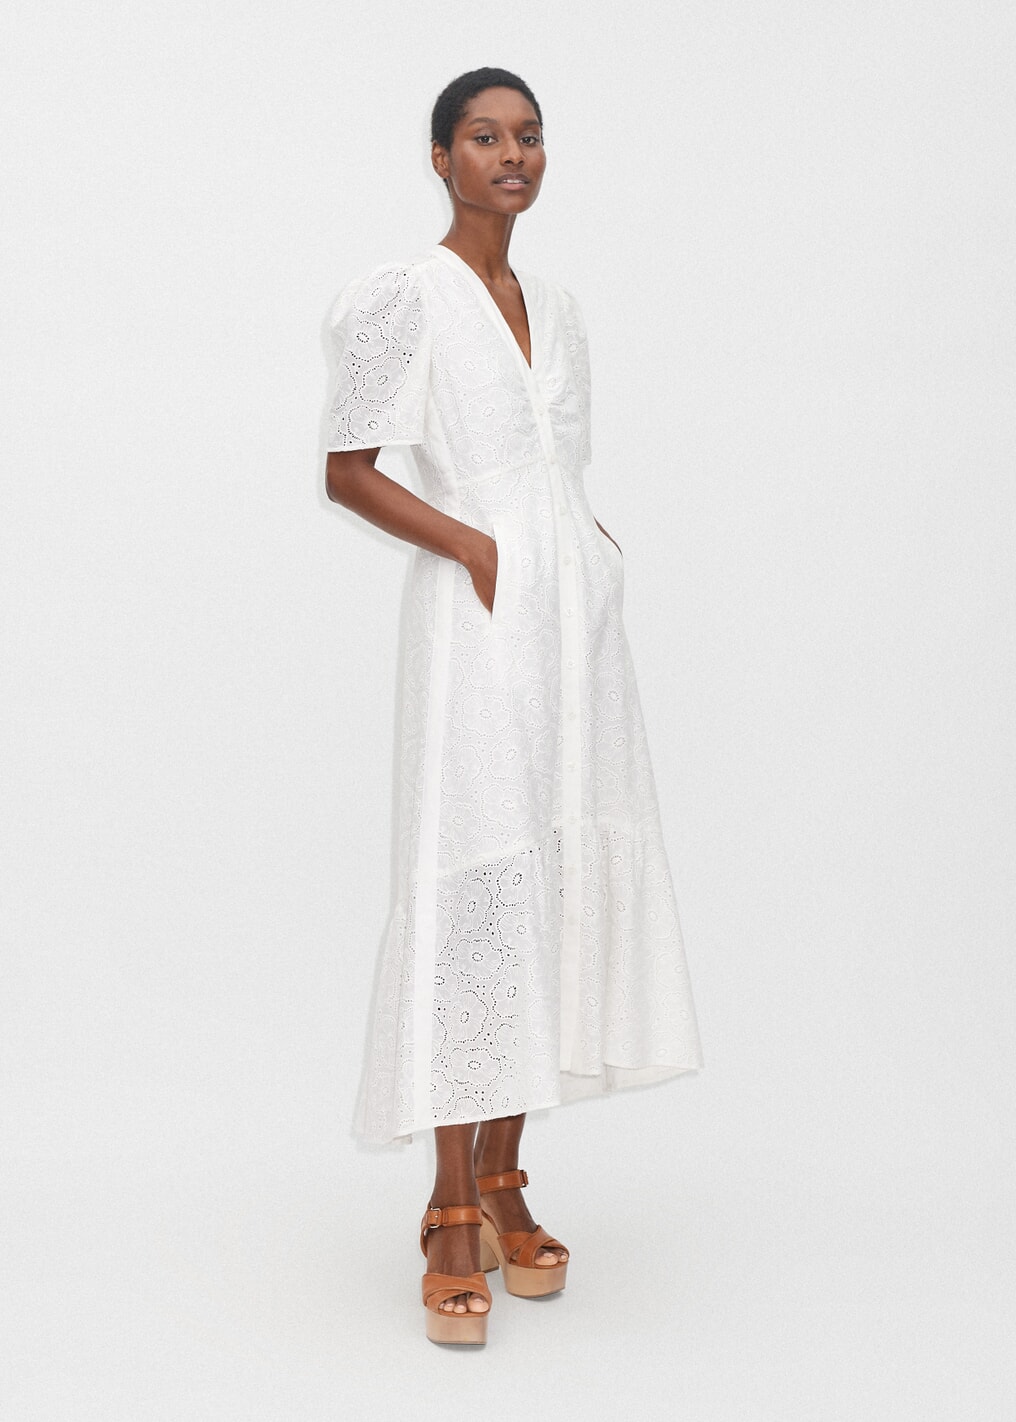 Cotton Broderie Maxi Dress, £275, Me+Em – buy now